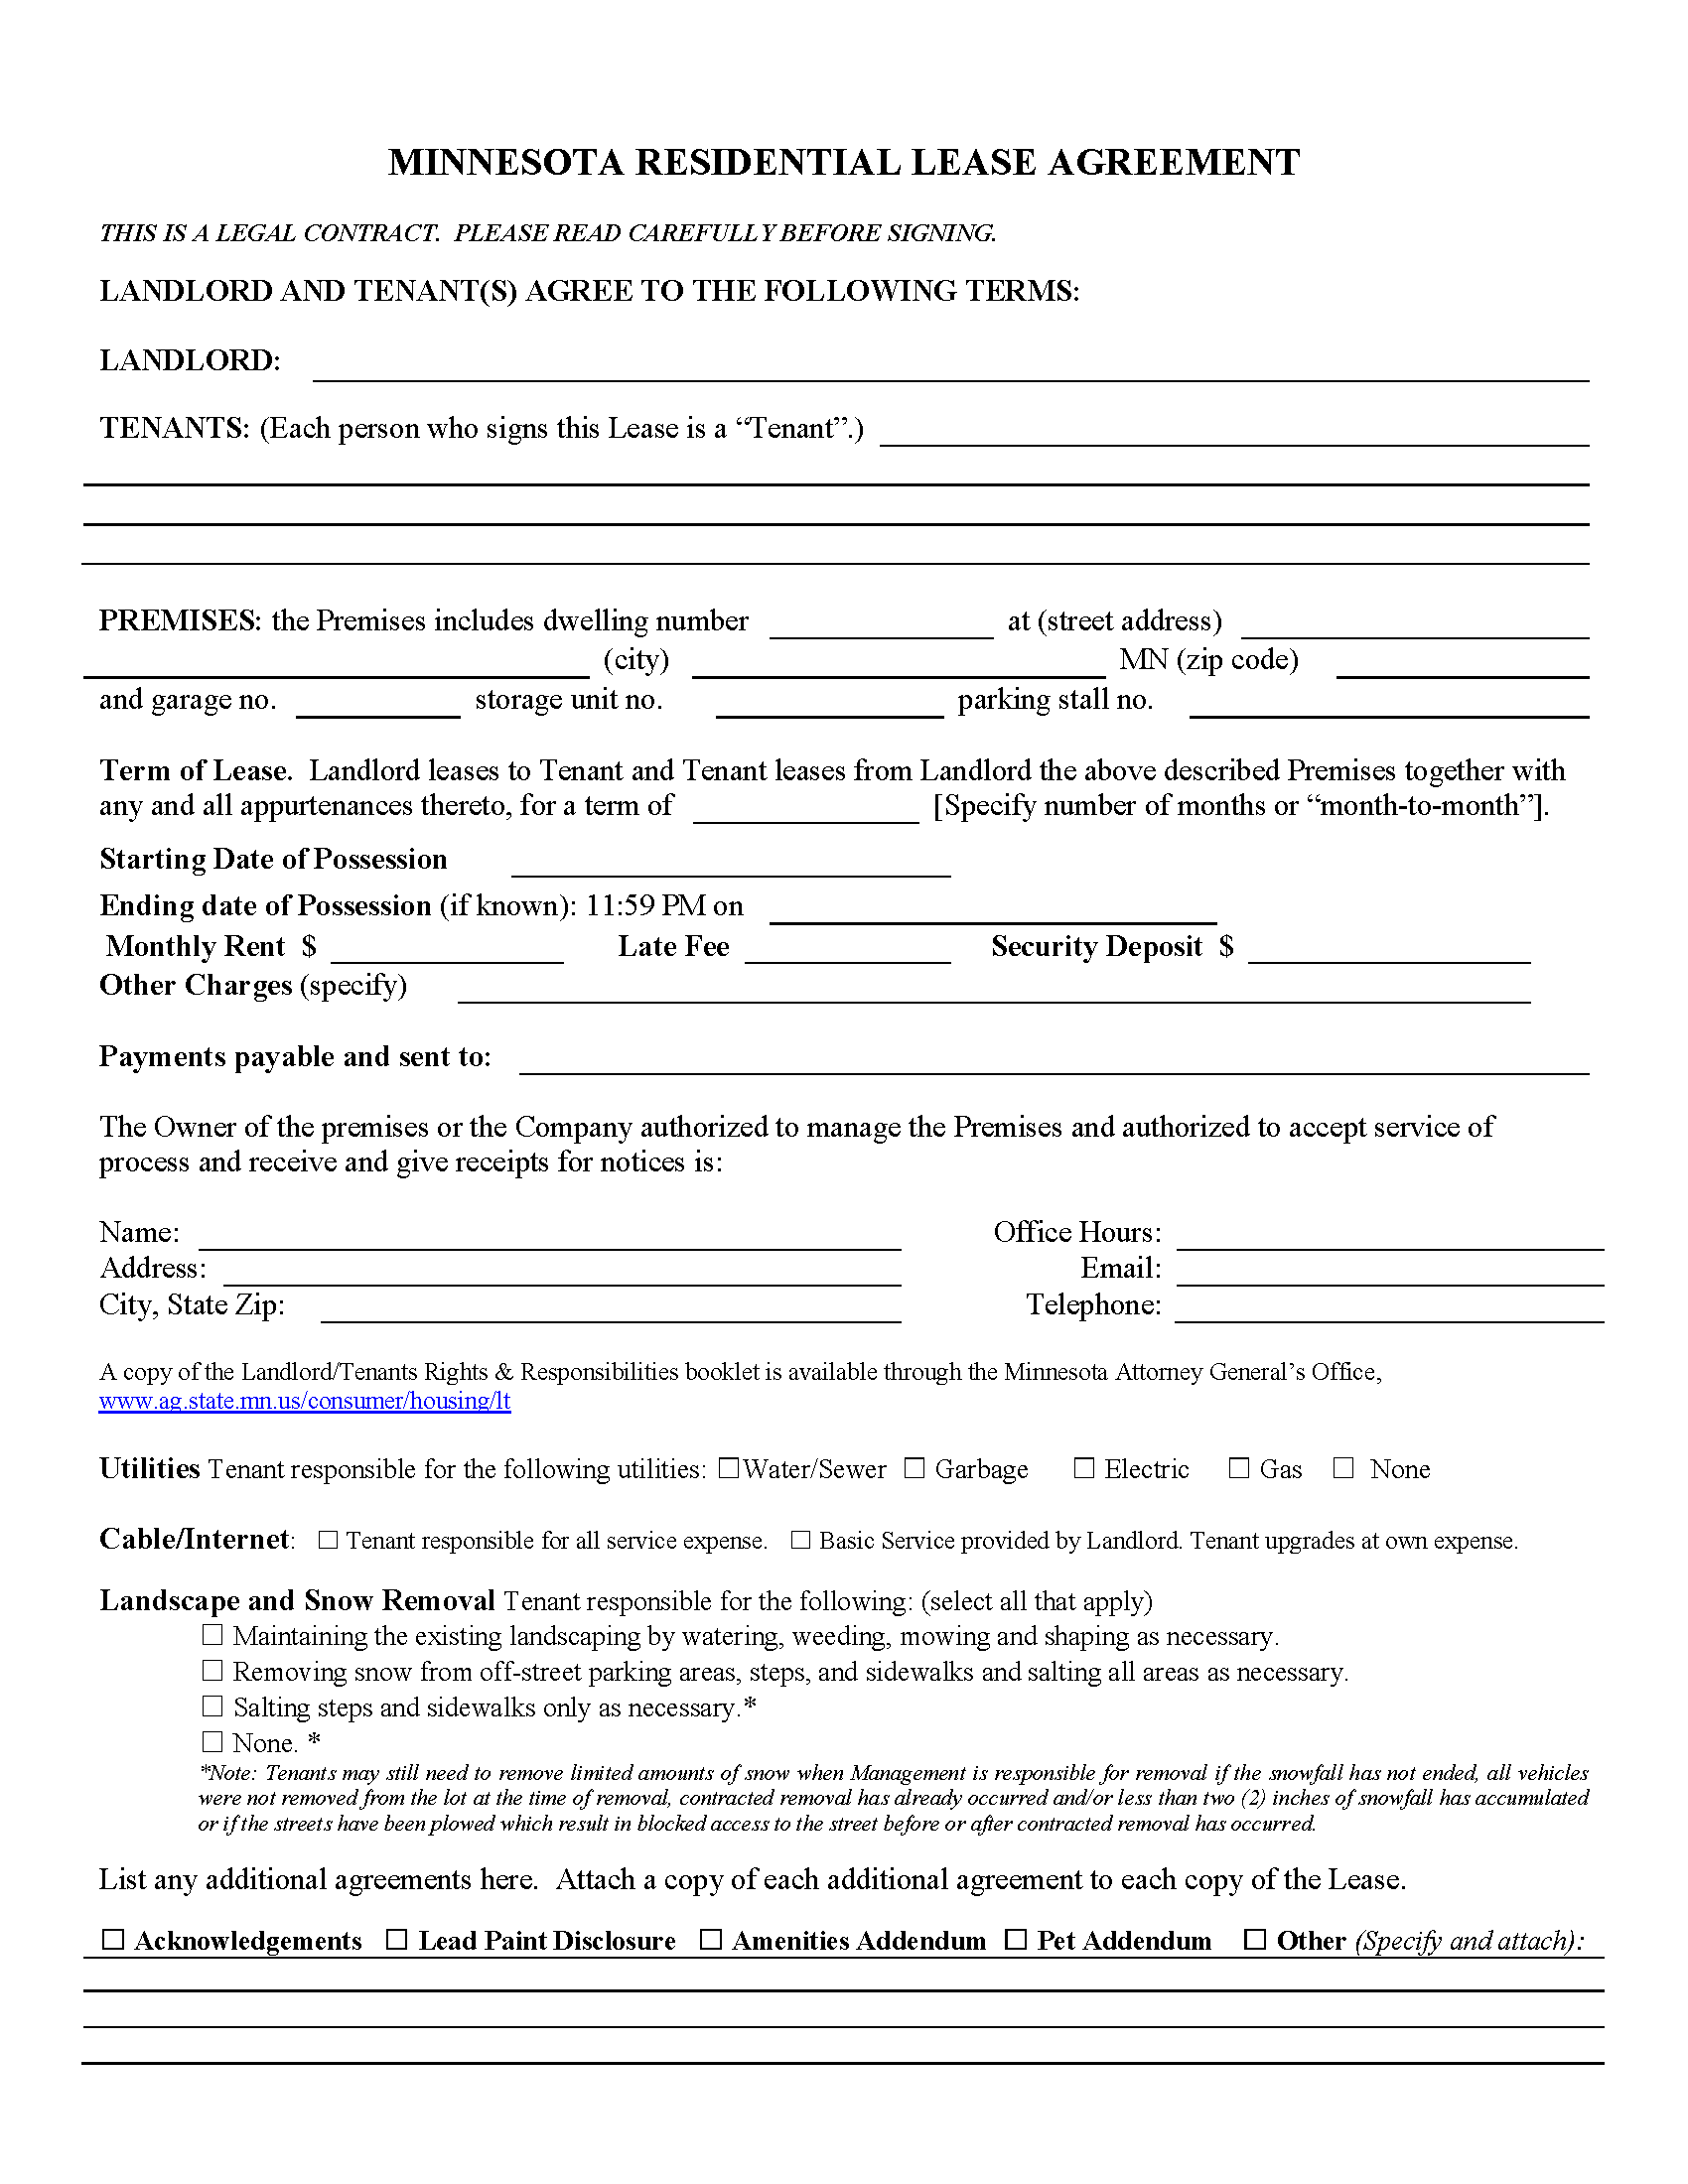 free-minnesota-standard-residential-lease-agreement-form-pdf-word